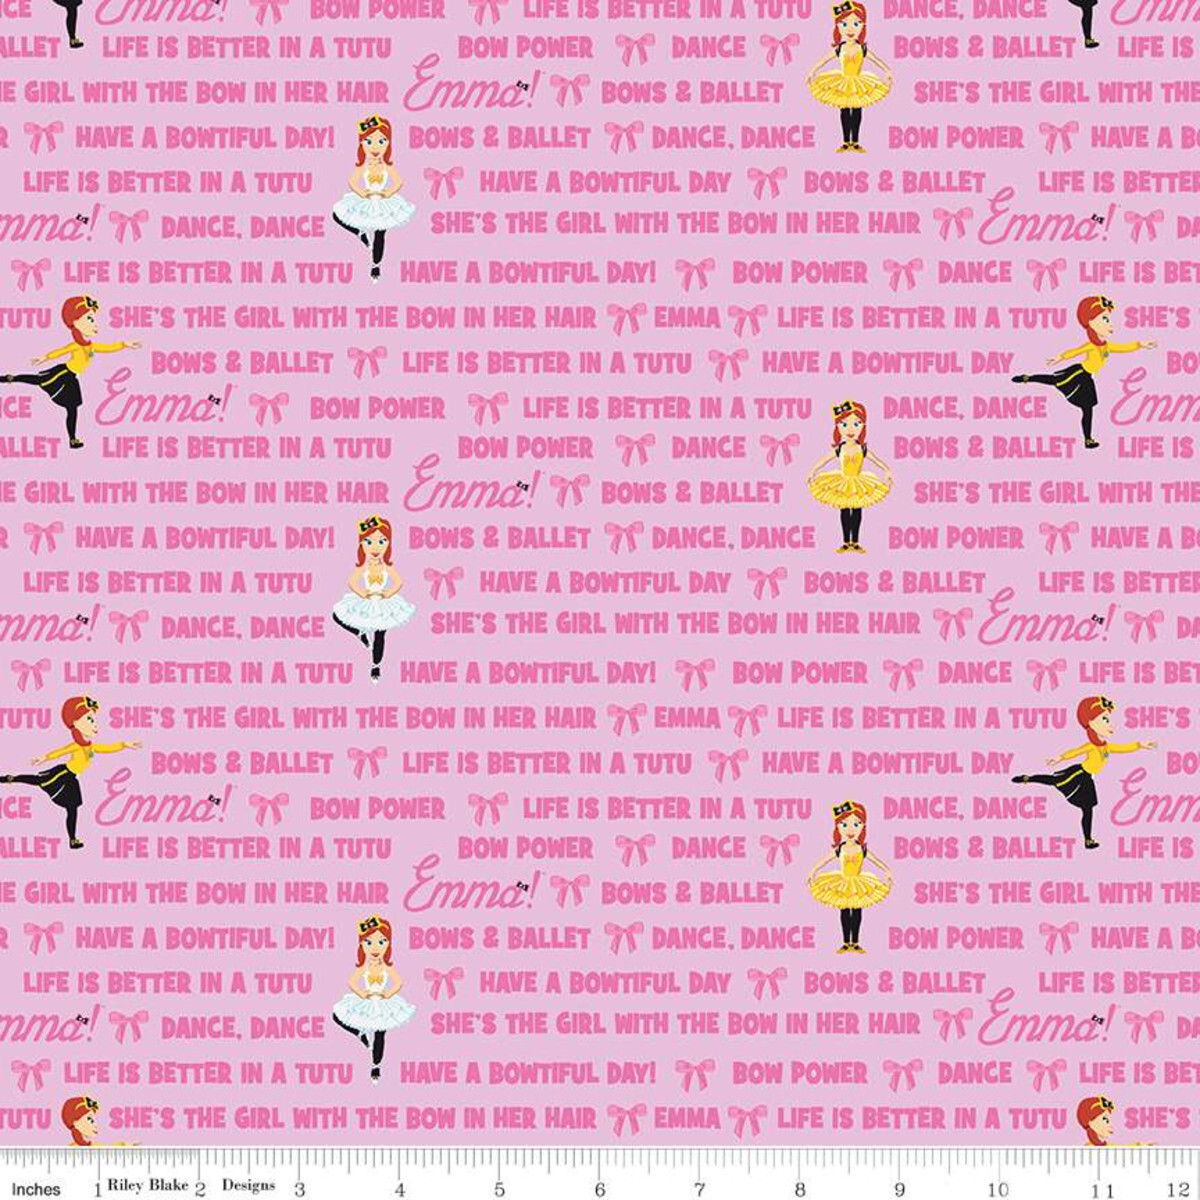 Wiggles Emma Riley Blake Icons Pink